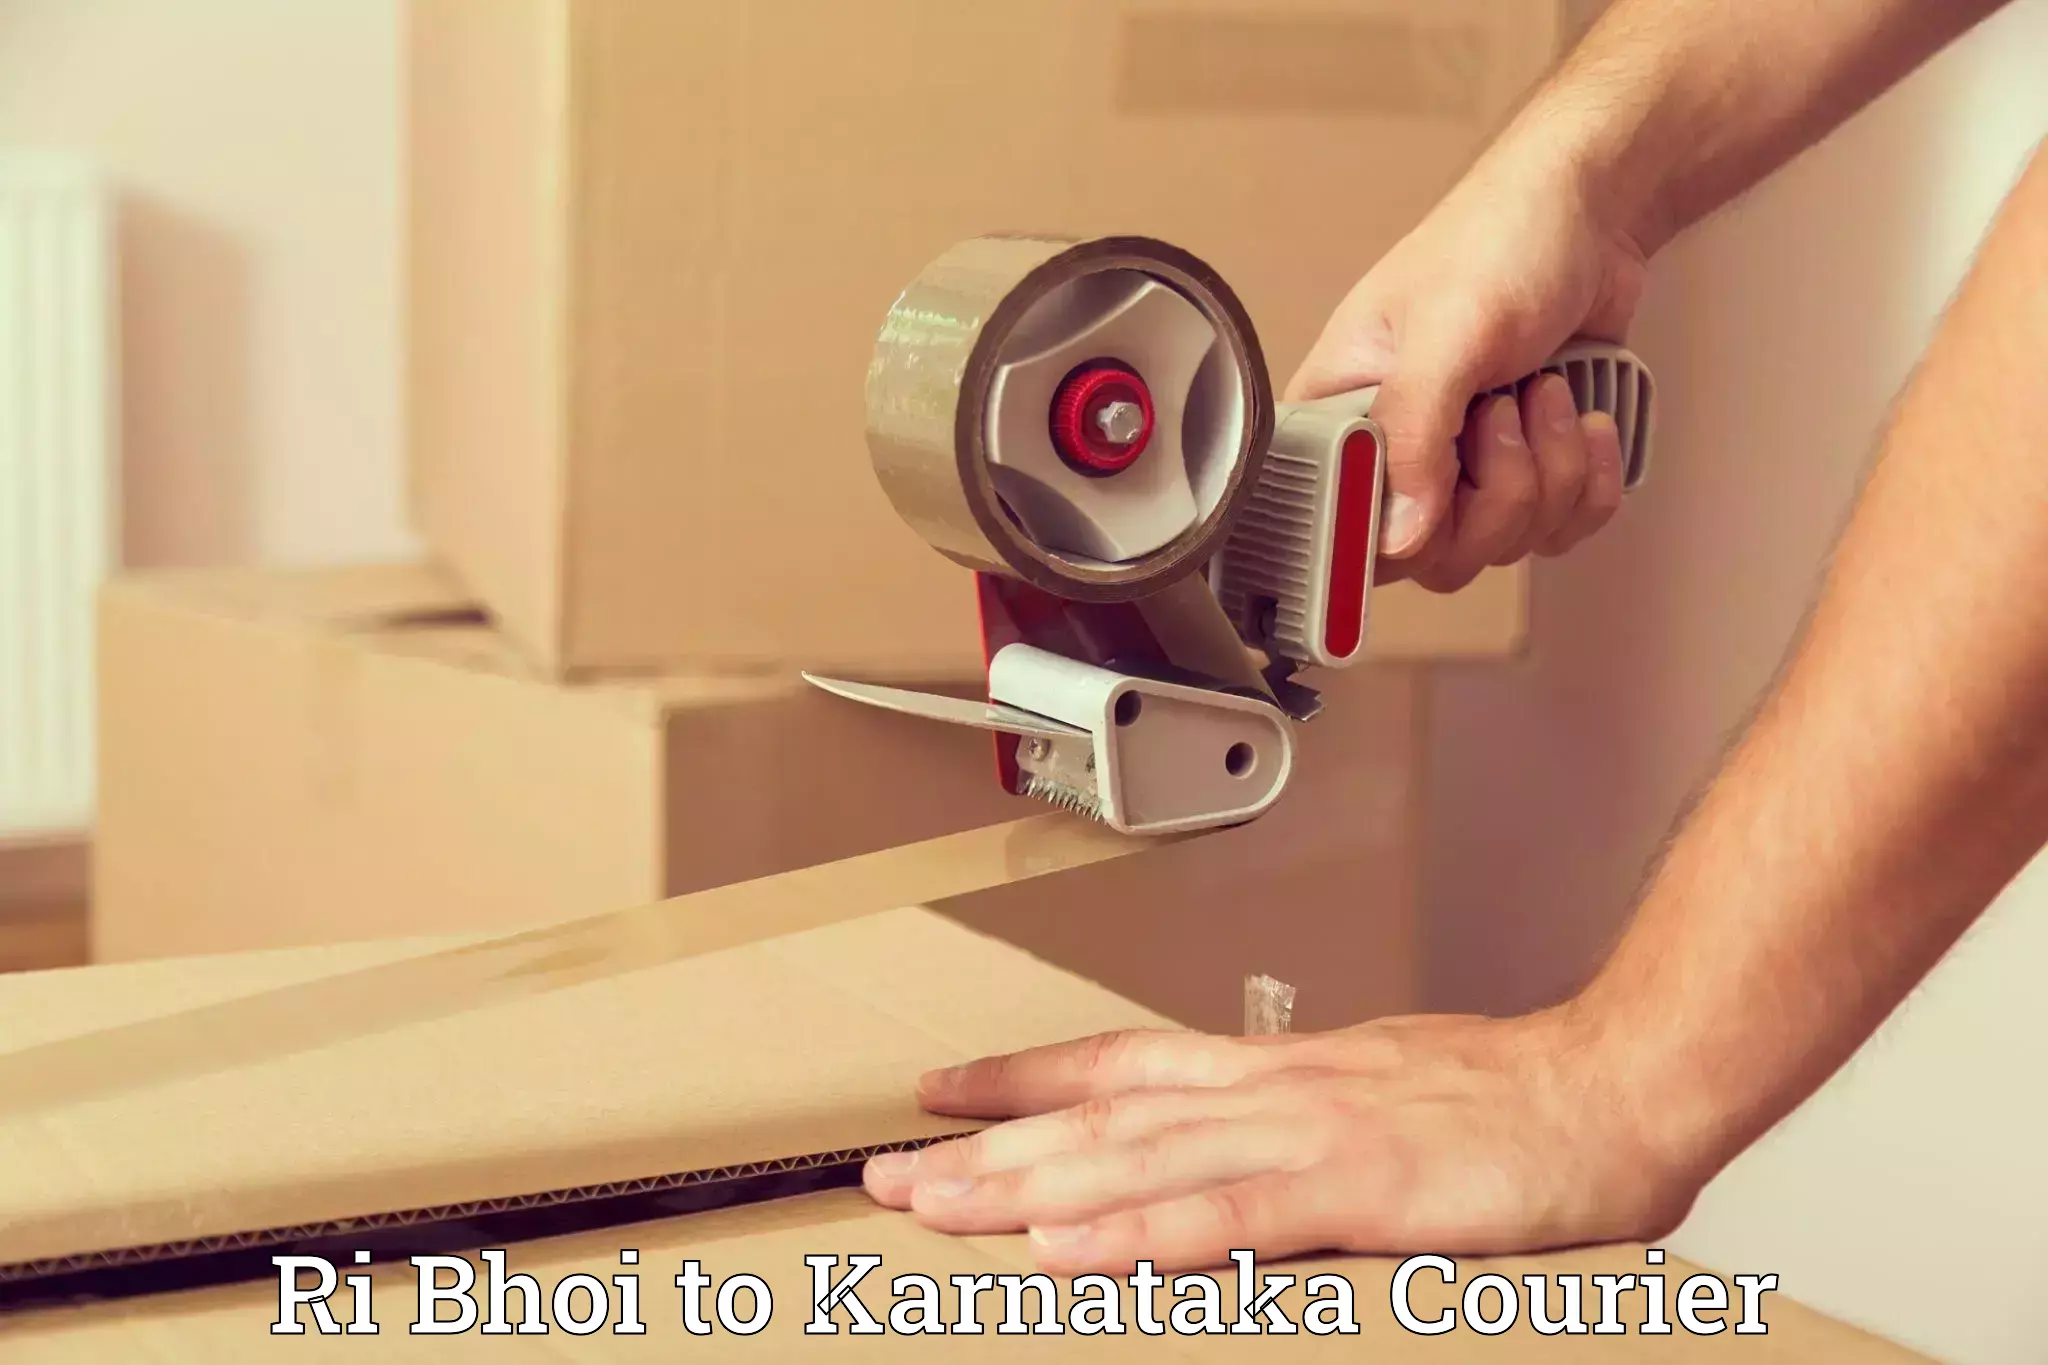 Efficient packing and moving Ri Bhoi to Karnataka